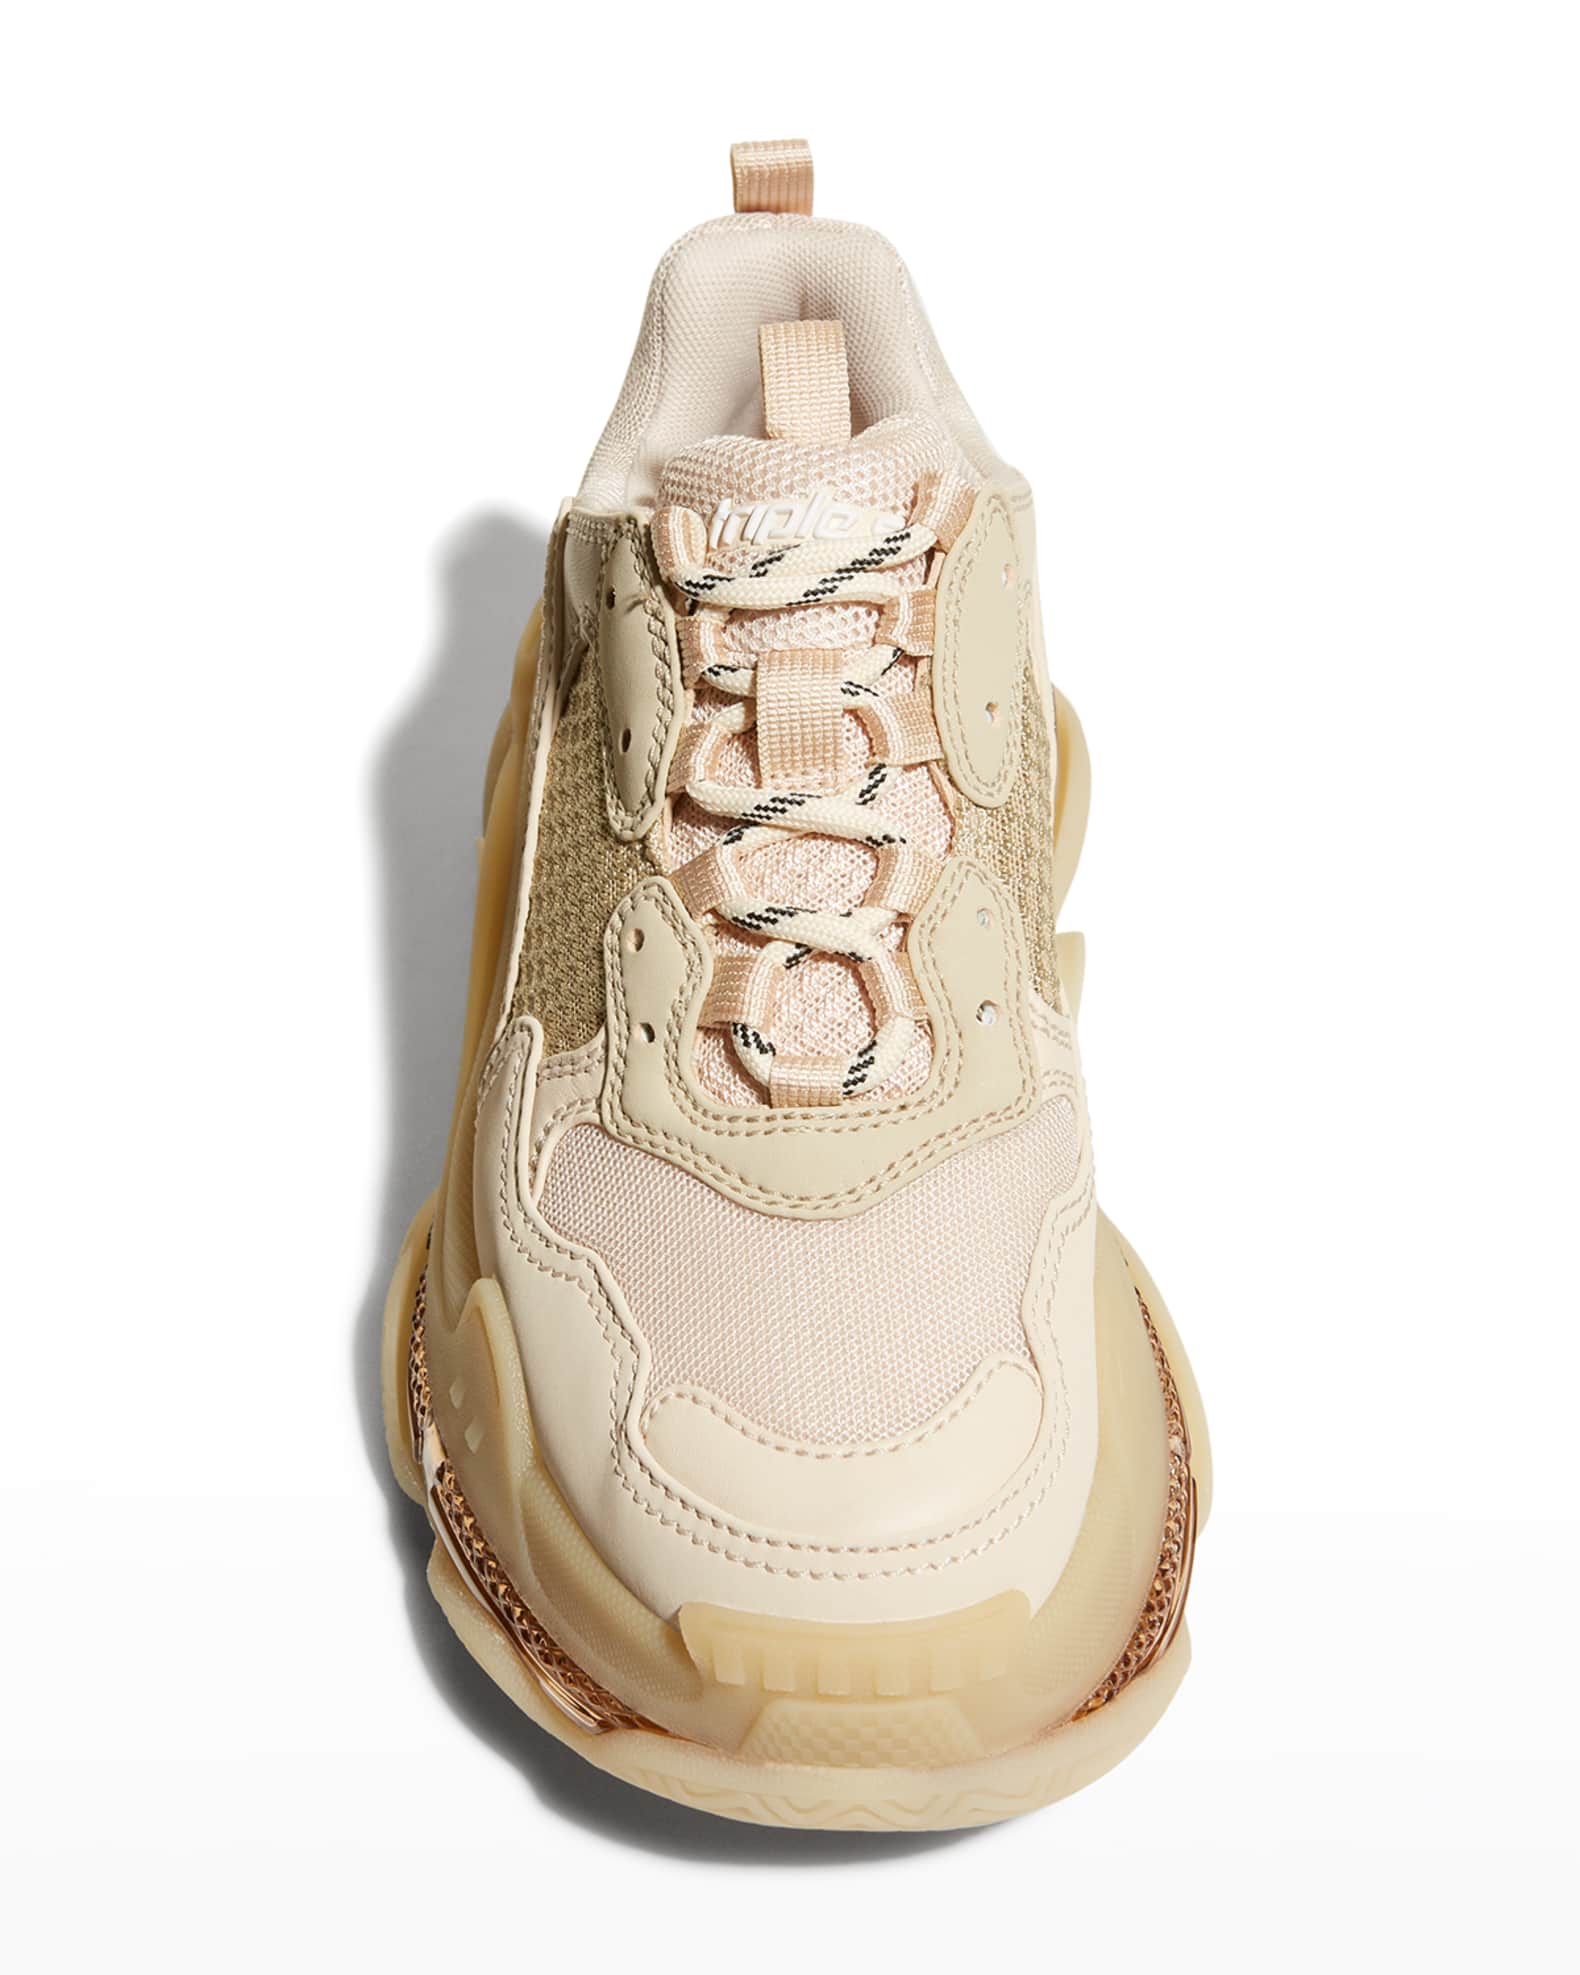 Balenciaga Triple S Air Nylon Sneakers | Neiman Marcus